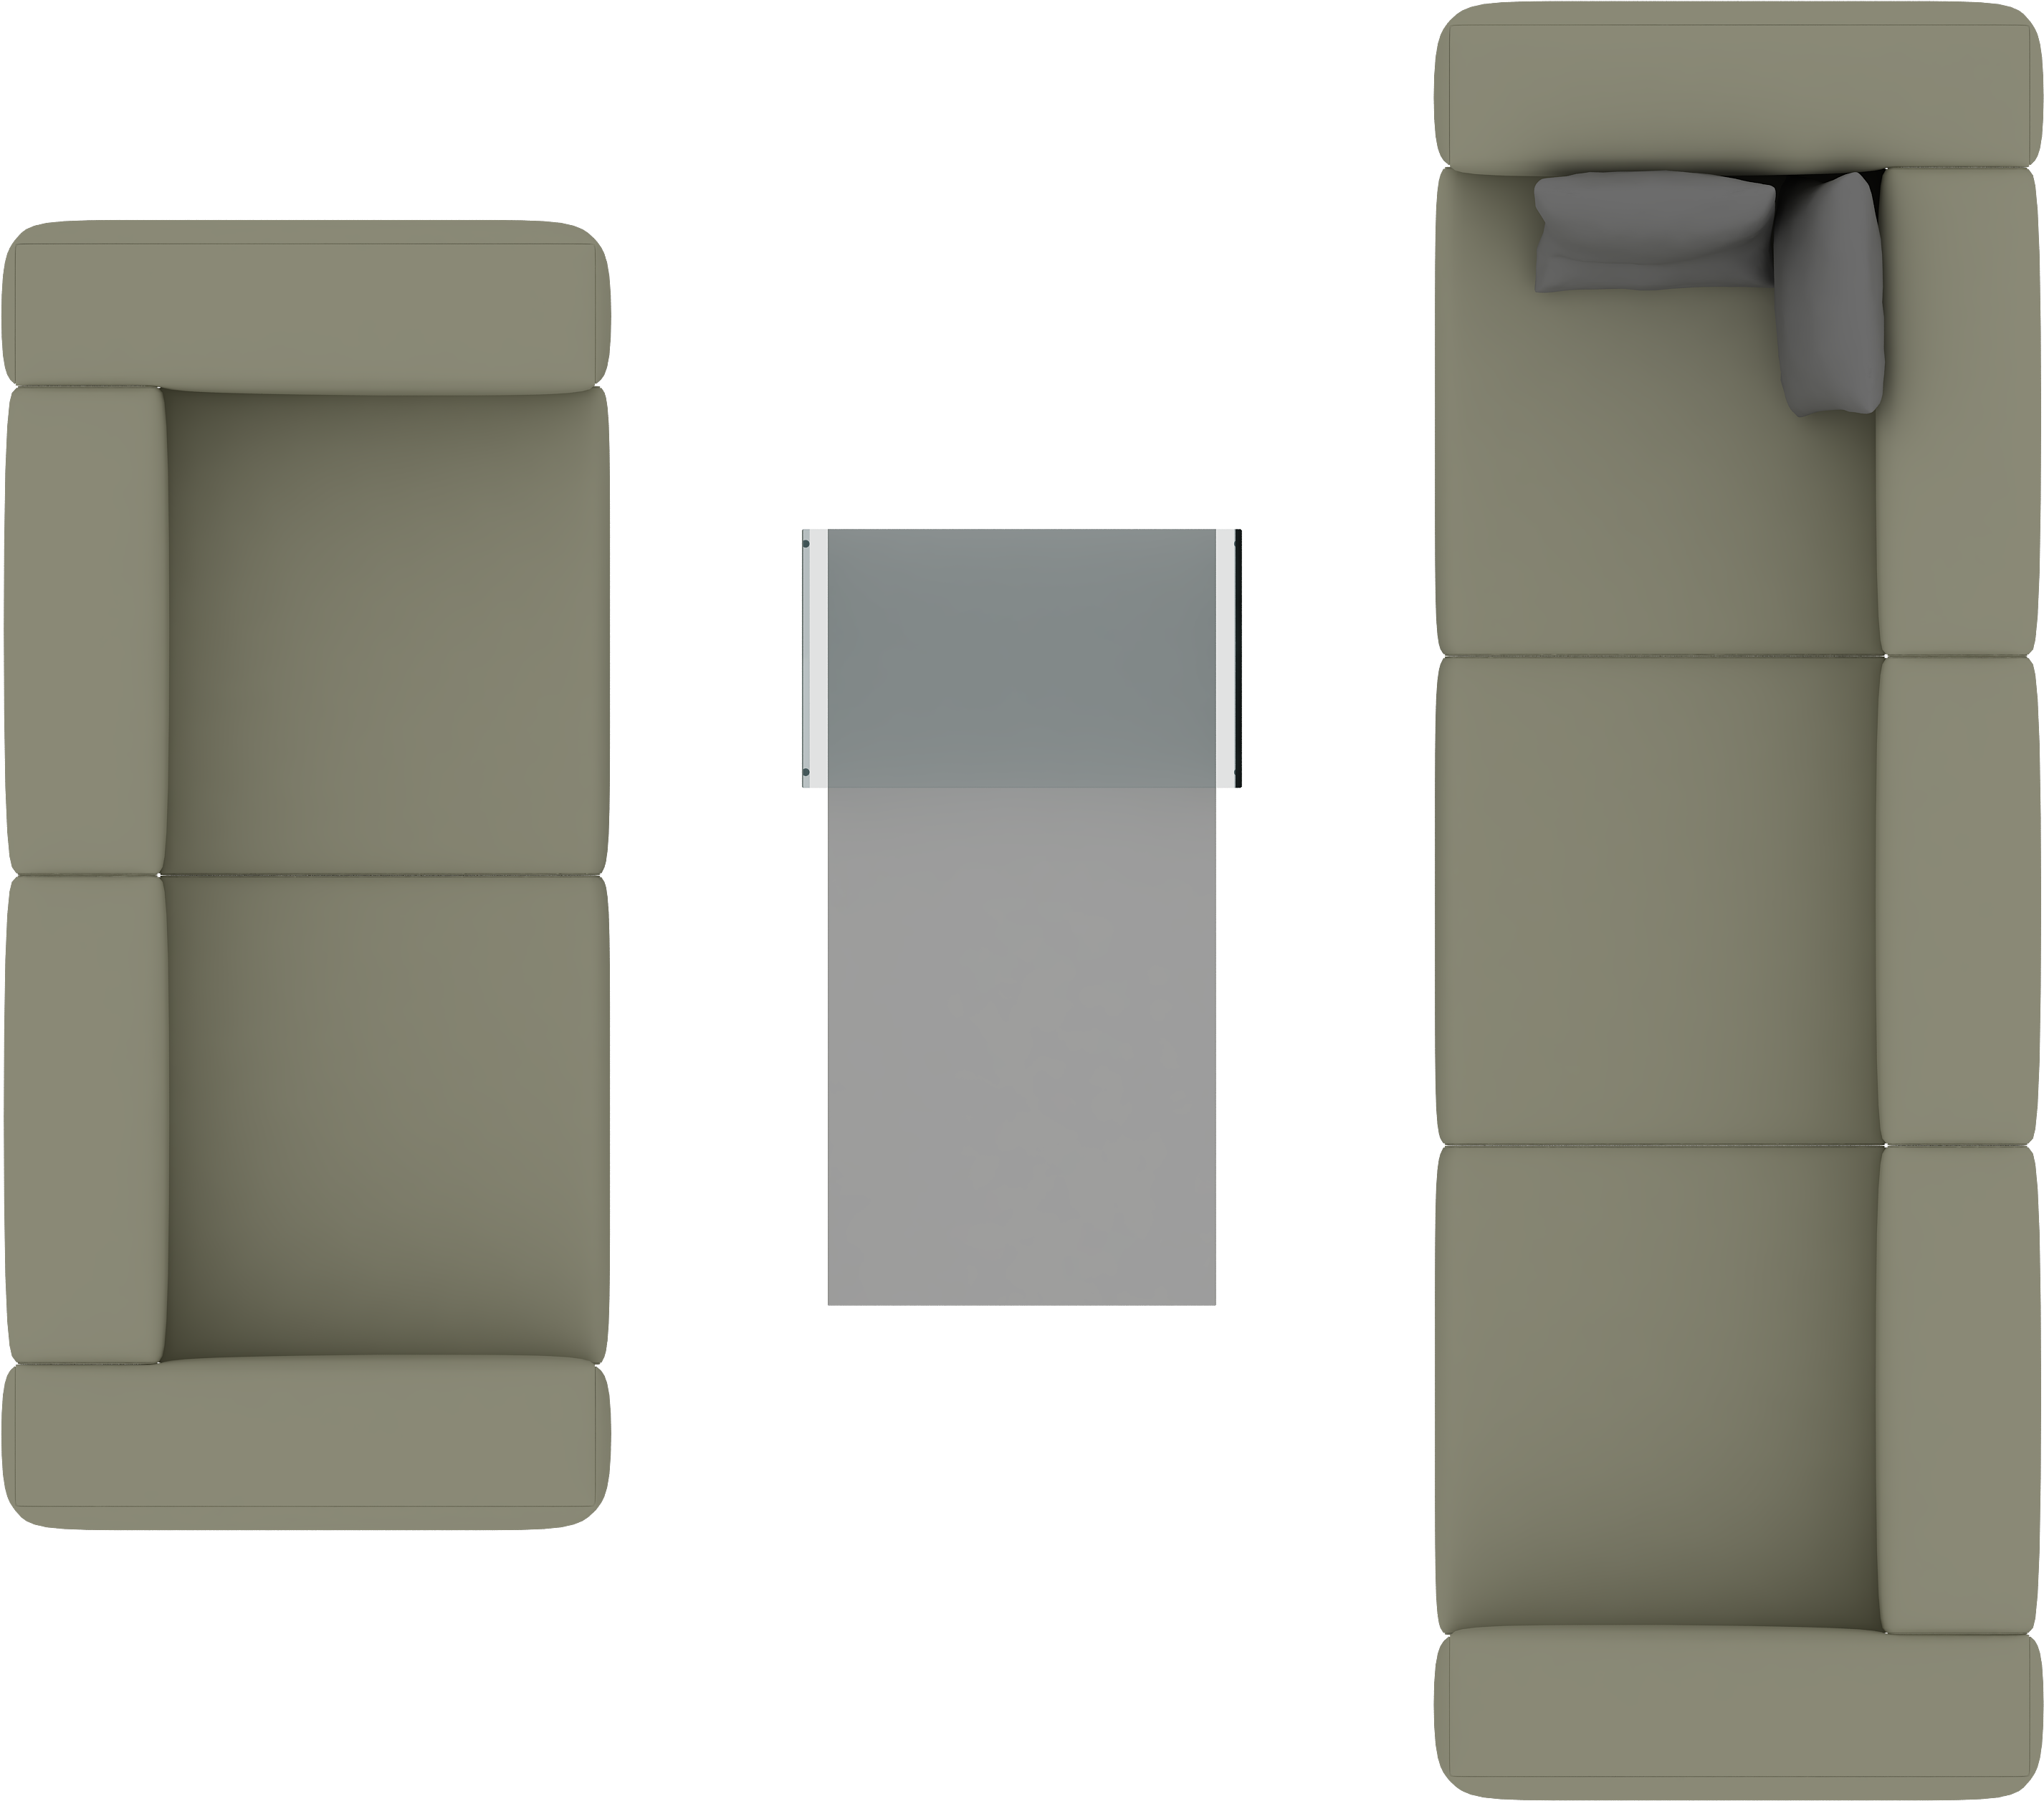 Modern Furniture Top View - Sofa Top View Png (3000x3000)